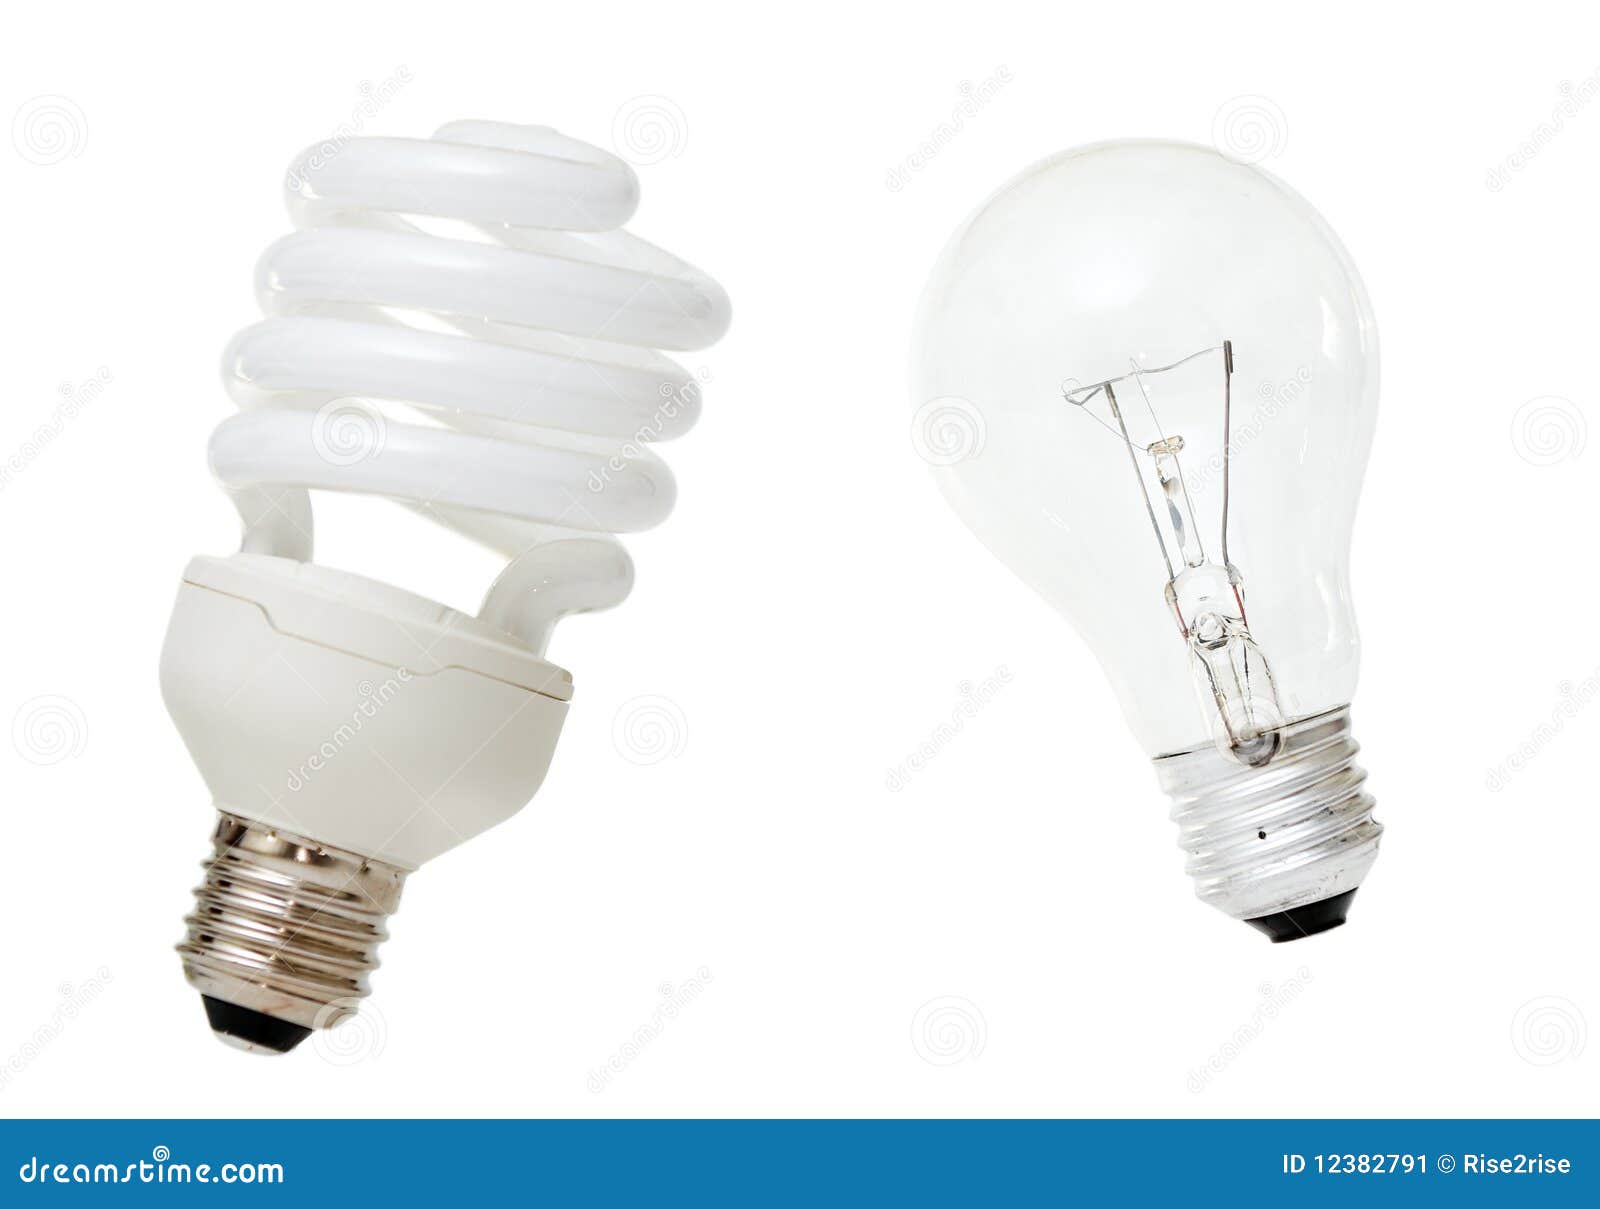 compact fluorescent lamp & incandescent bulb